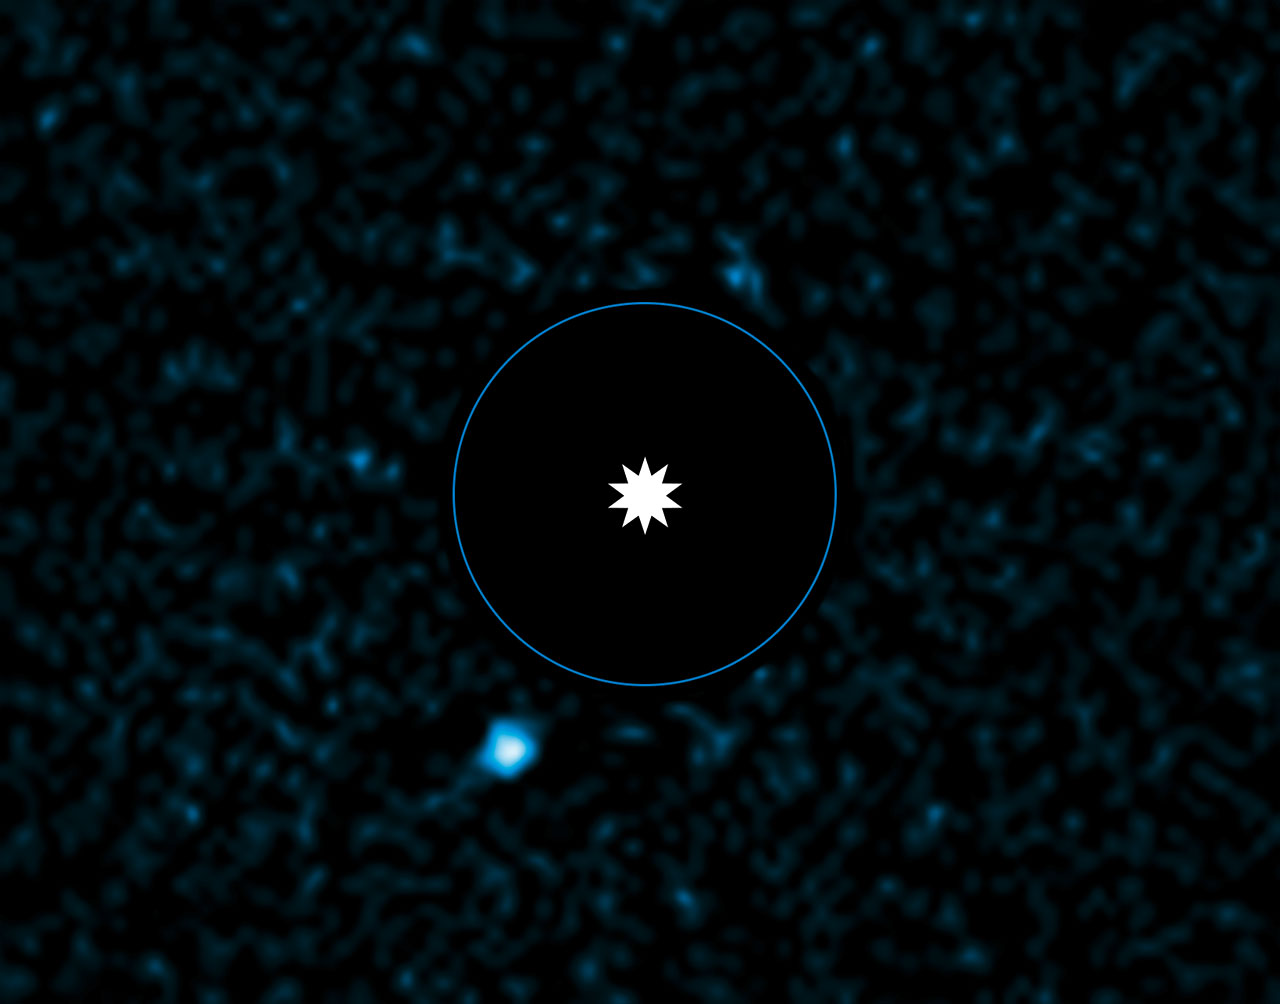 VLT image of exoplanet HD 95086 b